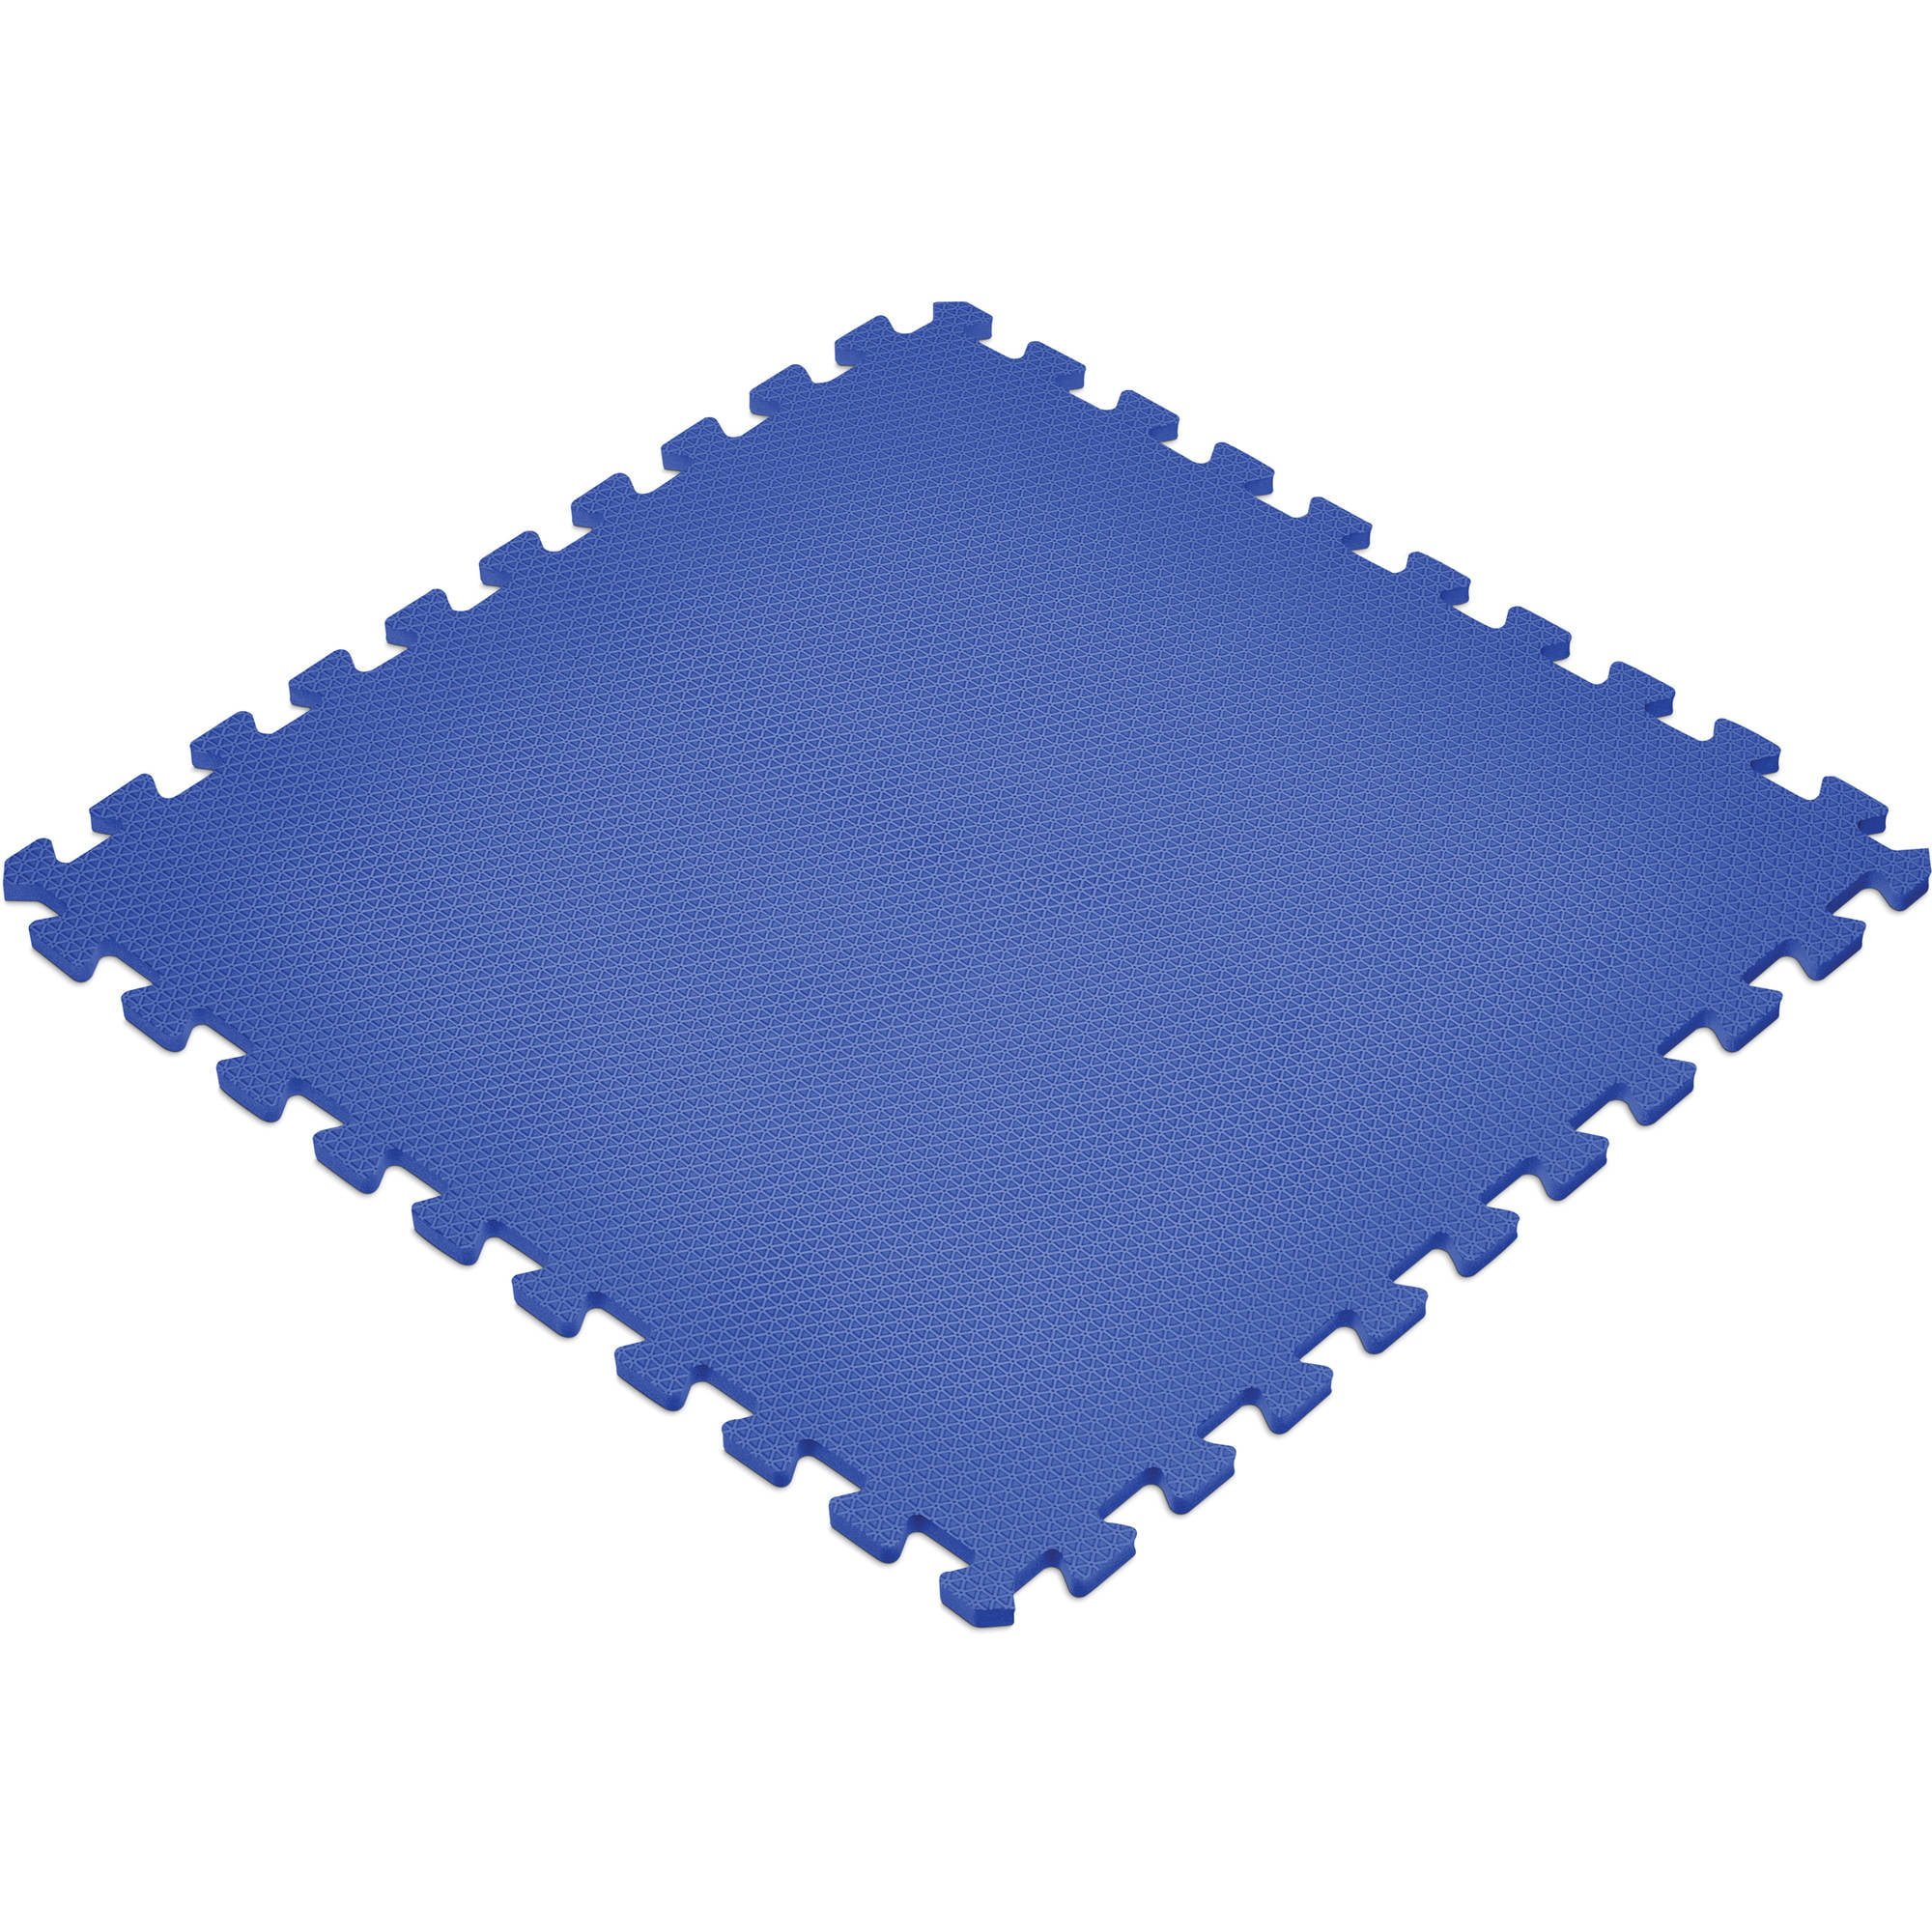 24 sq ft blue interlocking foam floor puzzle tiles mats 